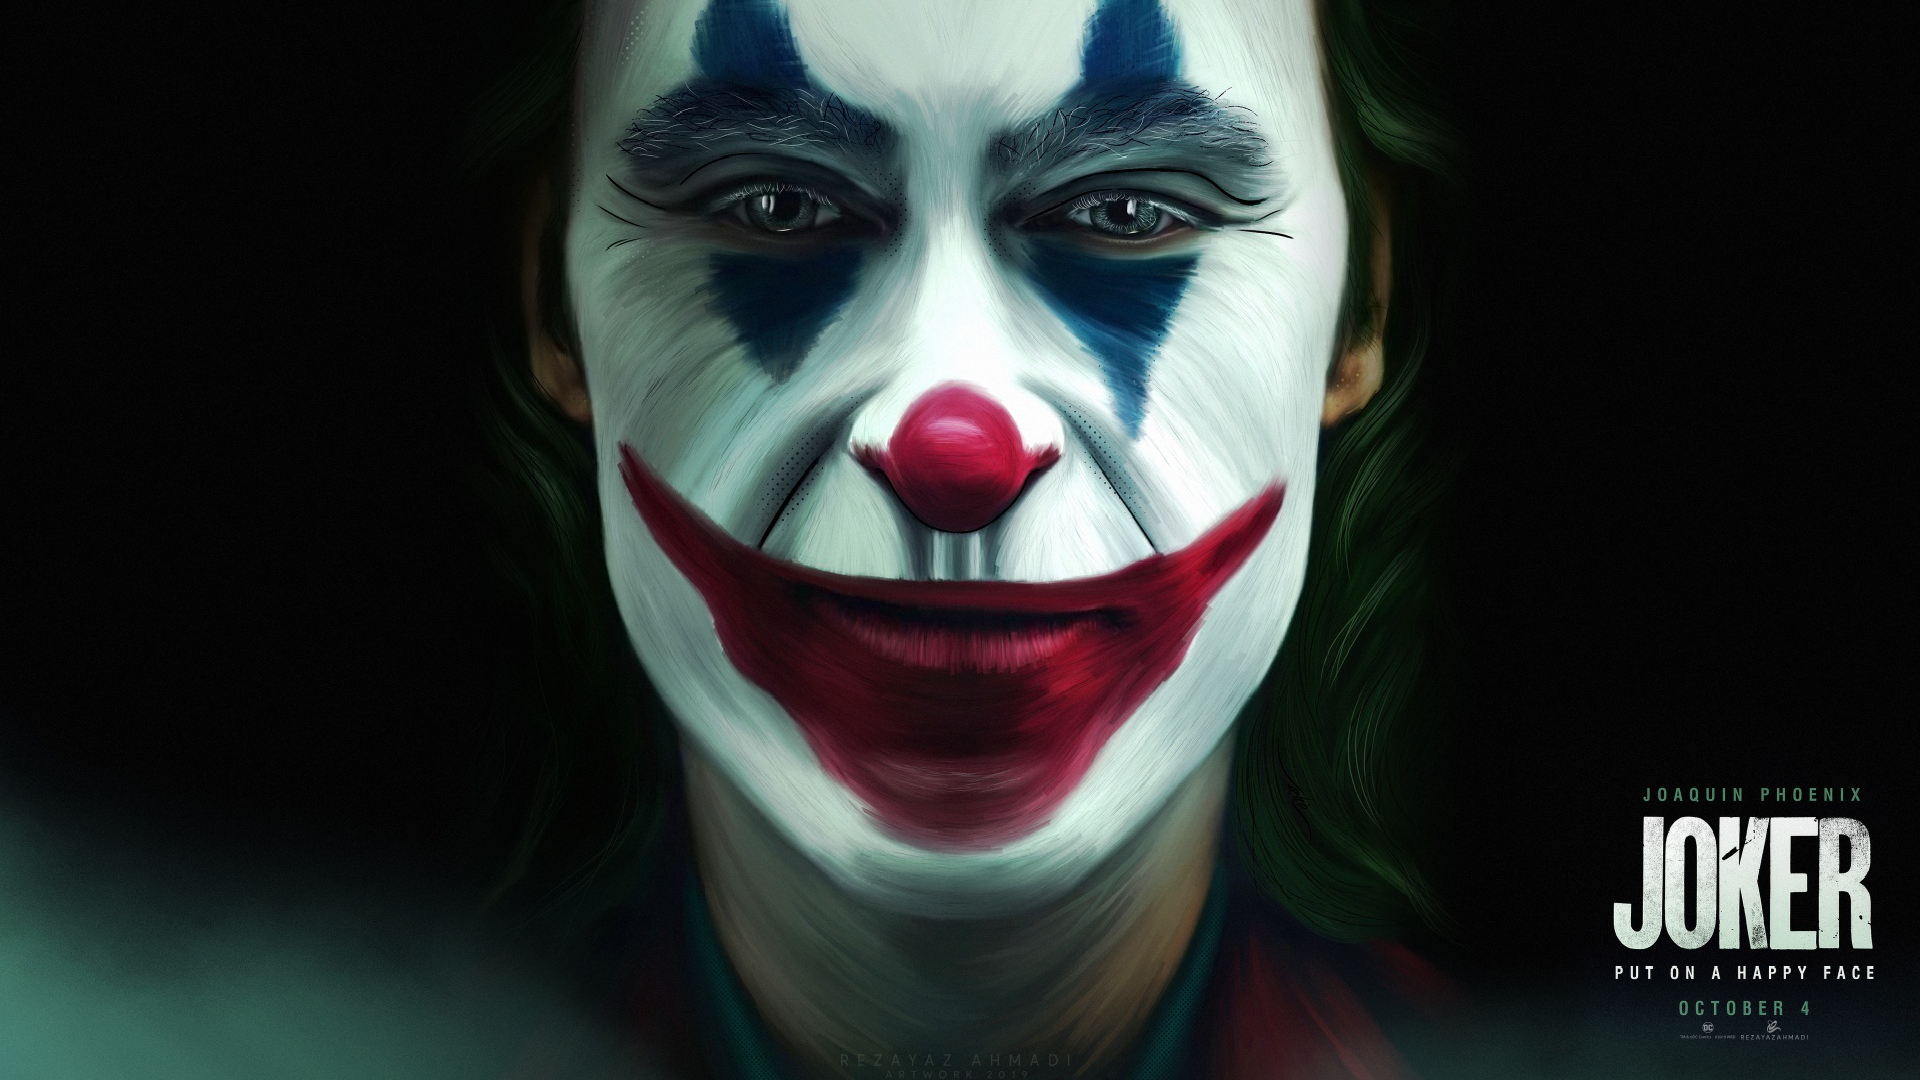 Joaquin Phoenix As The Joker Movie 2019 Download HQ Wallpaper